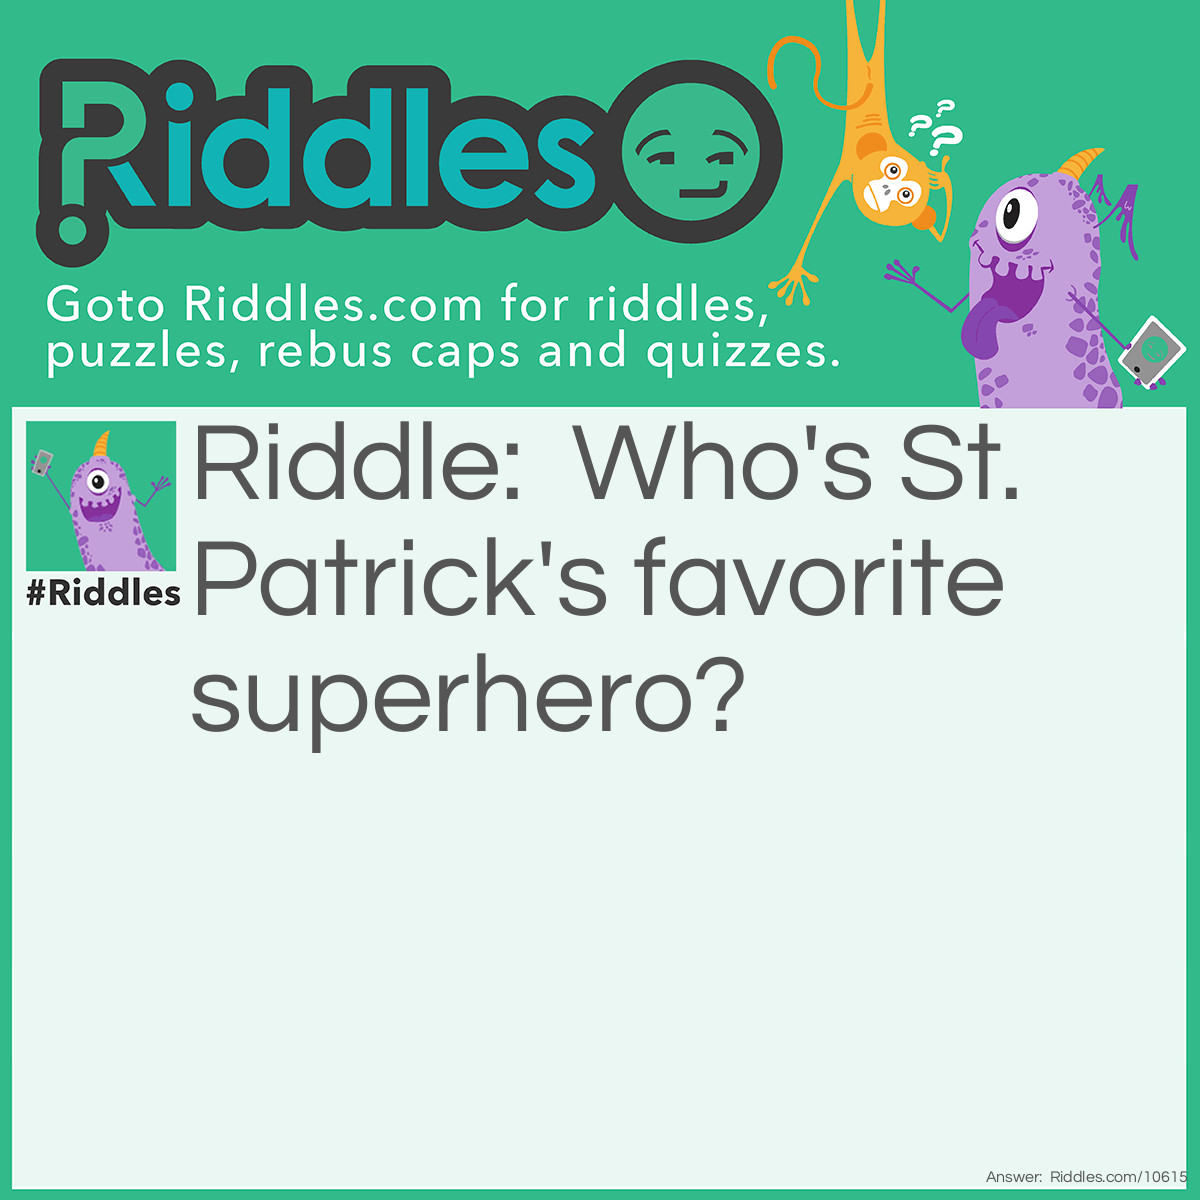 Riddle: Who's St. Patrick's favorite superhero? Answer: Green Lantern!